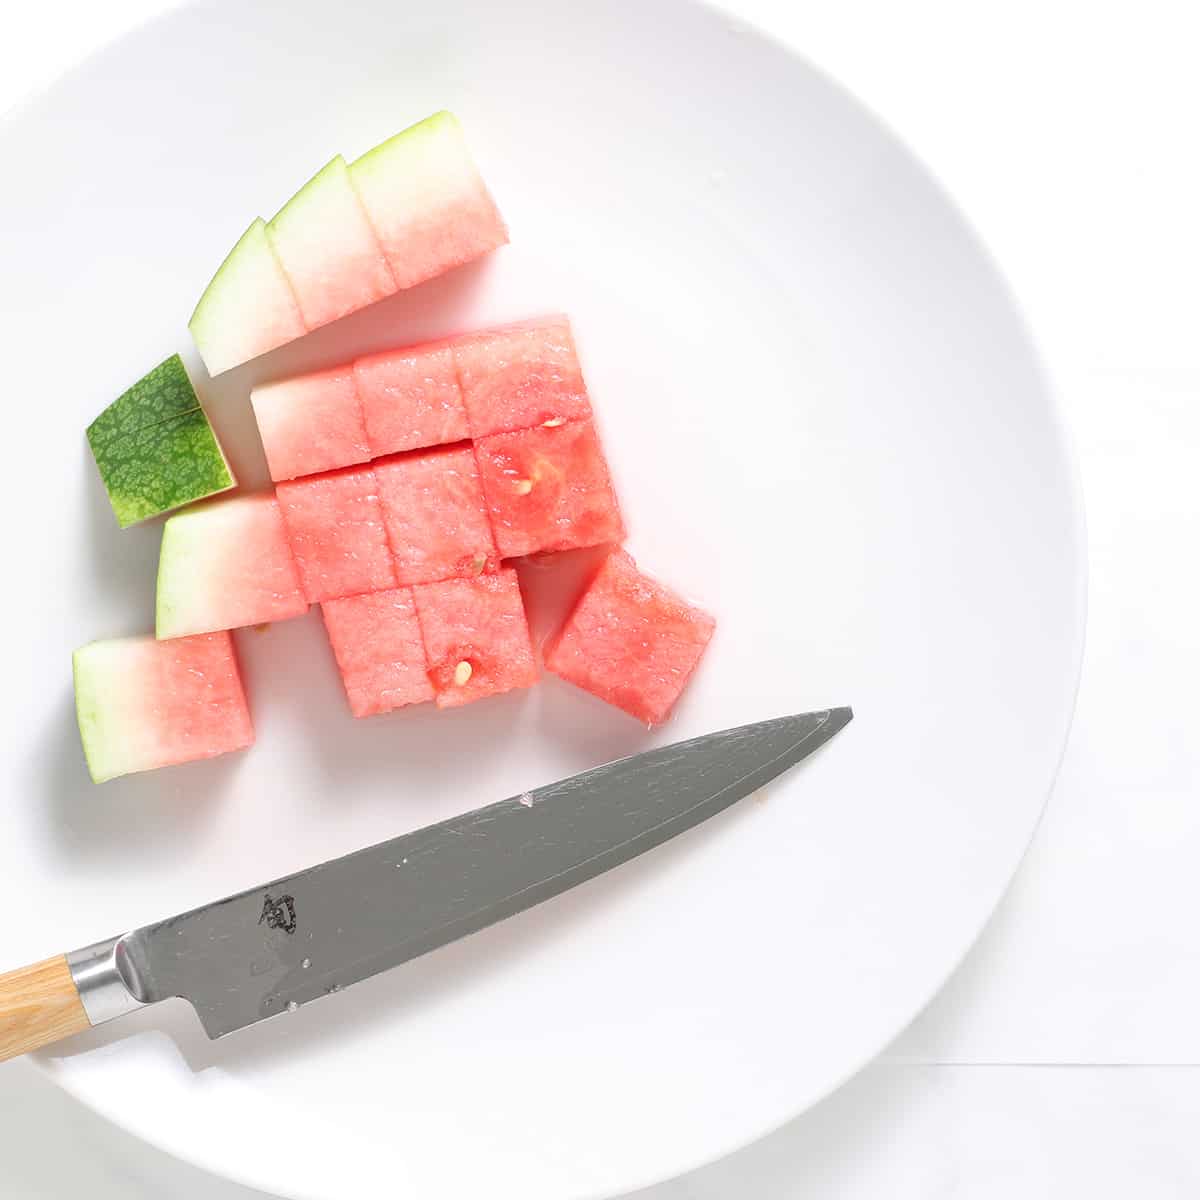 watermelon chunks being chopped